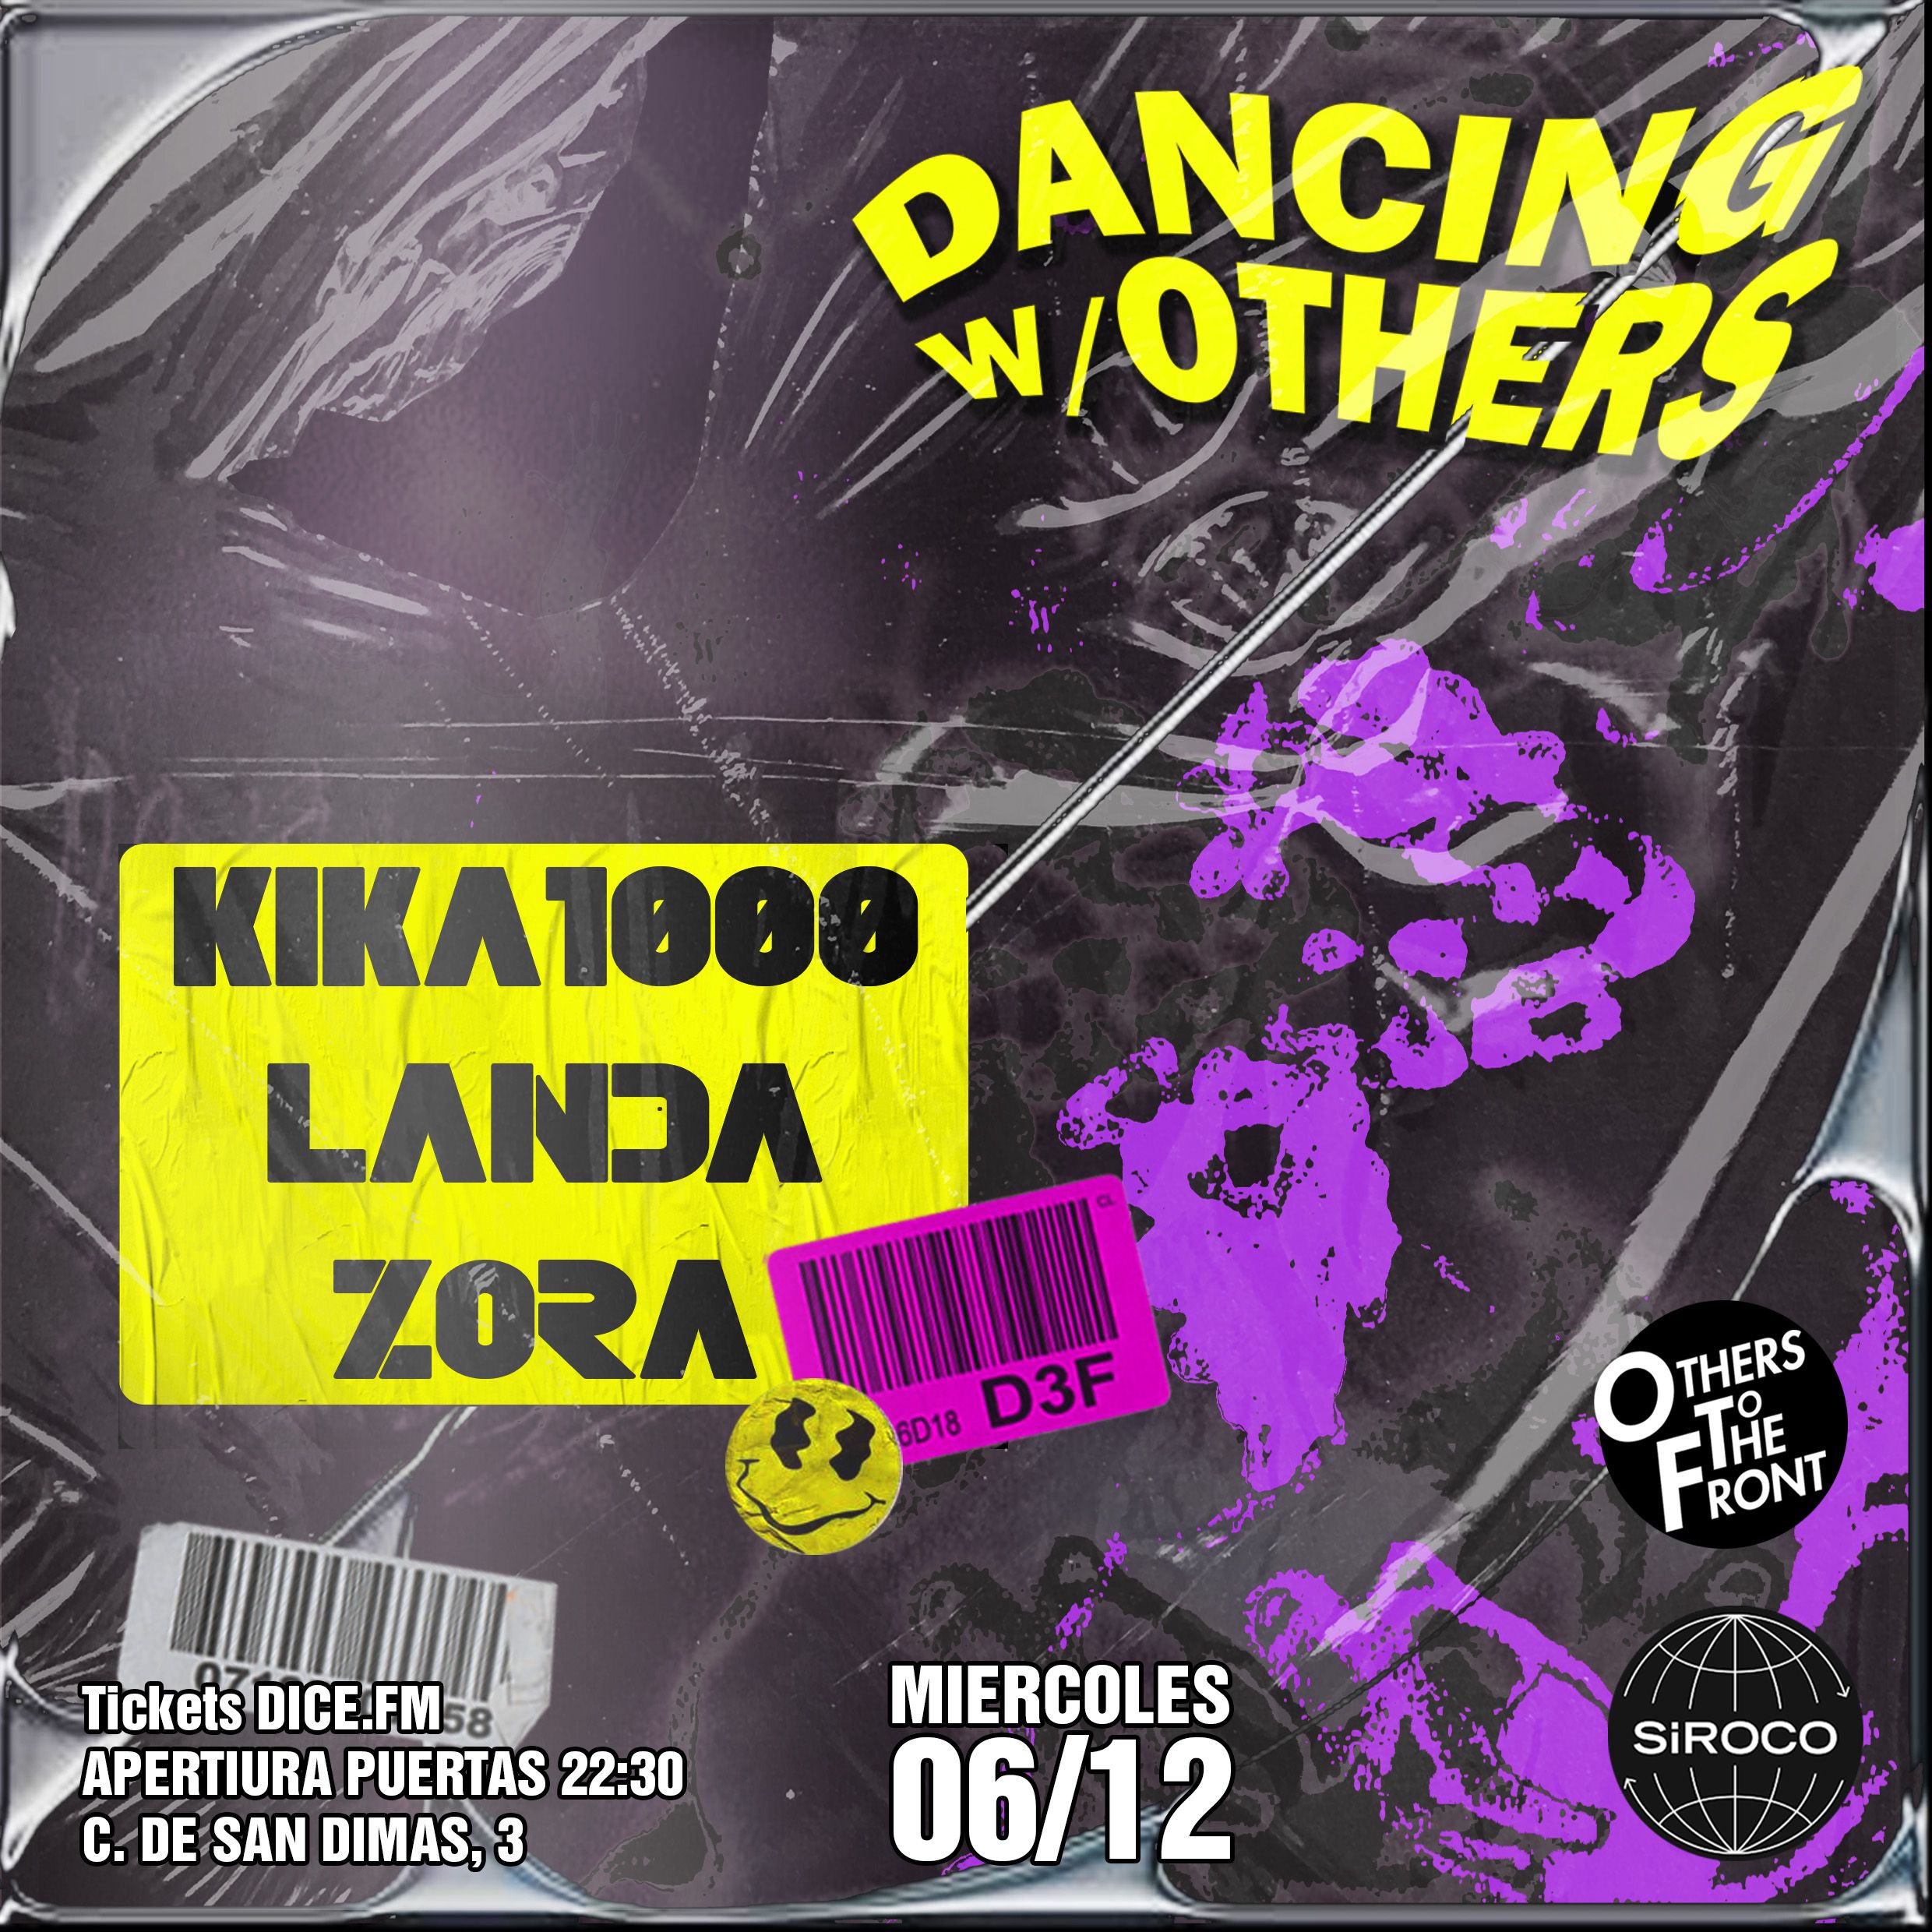 Others to the front: Kika 1000 + Zora + Landa